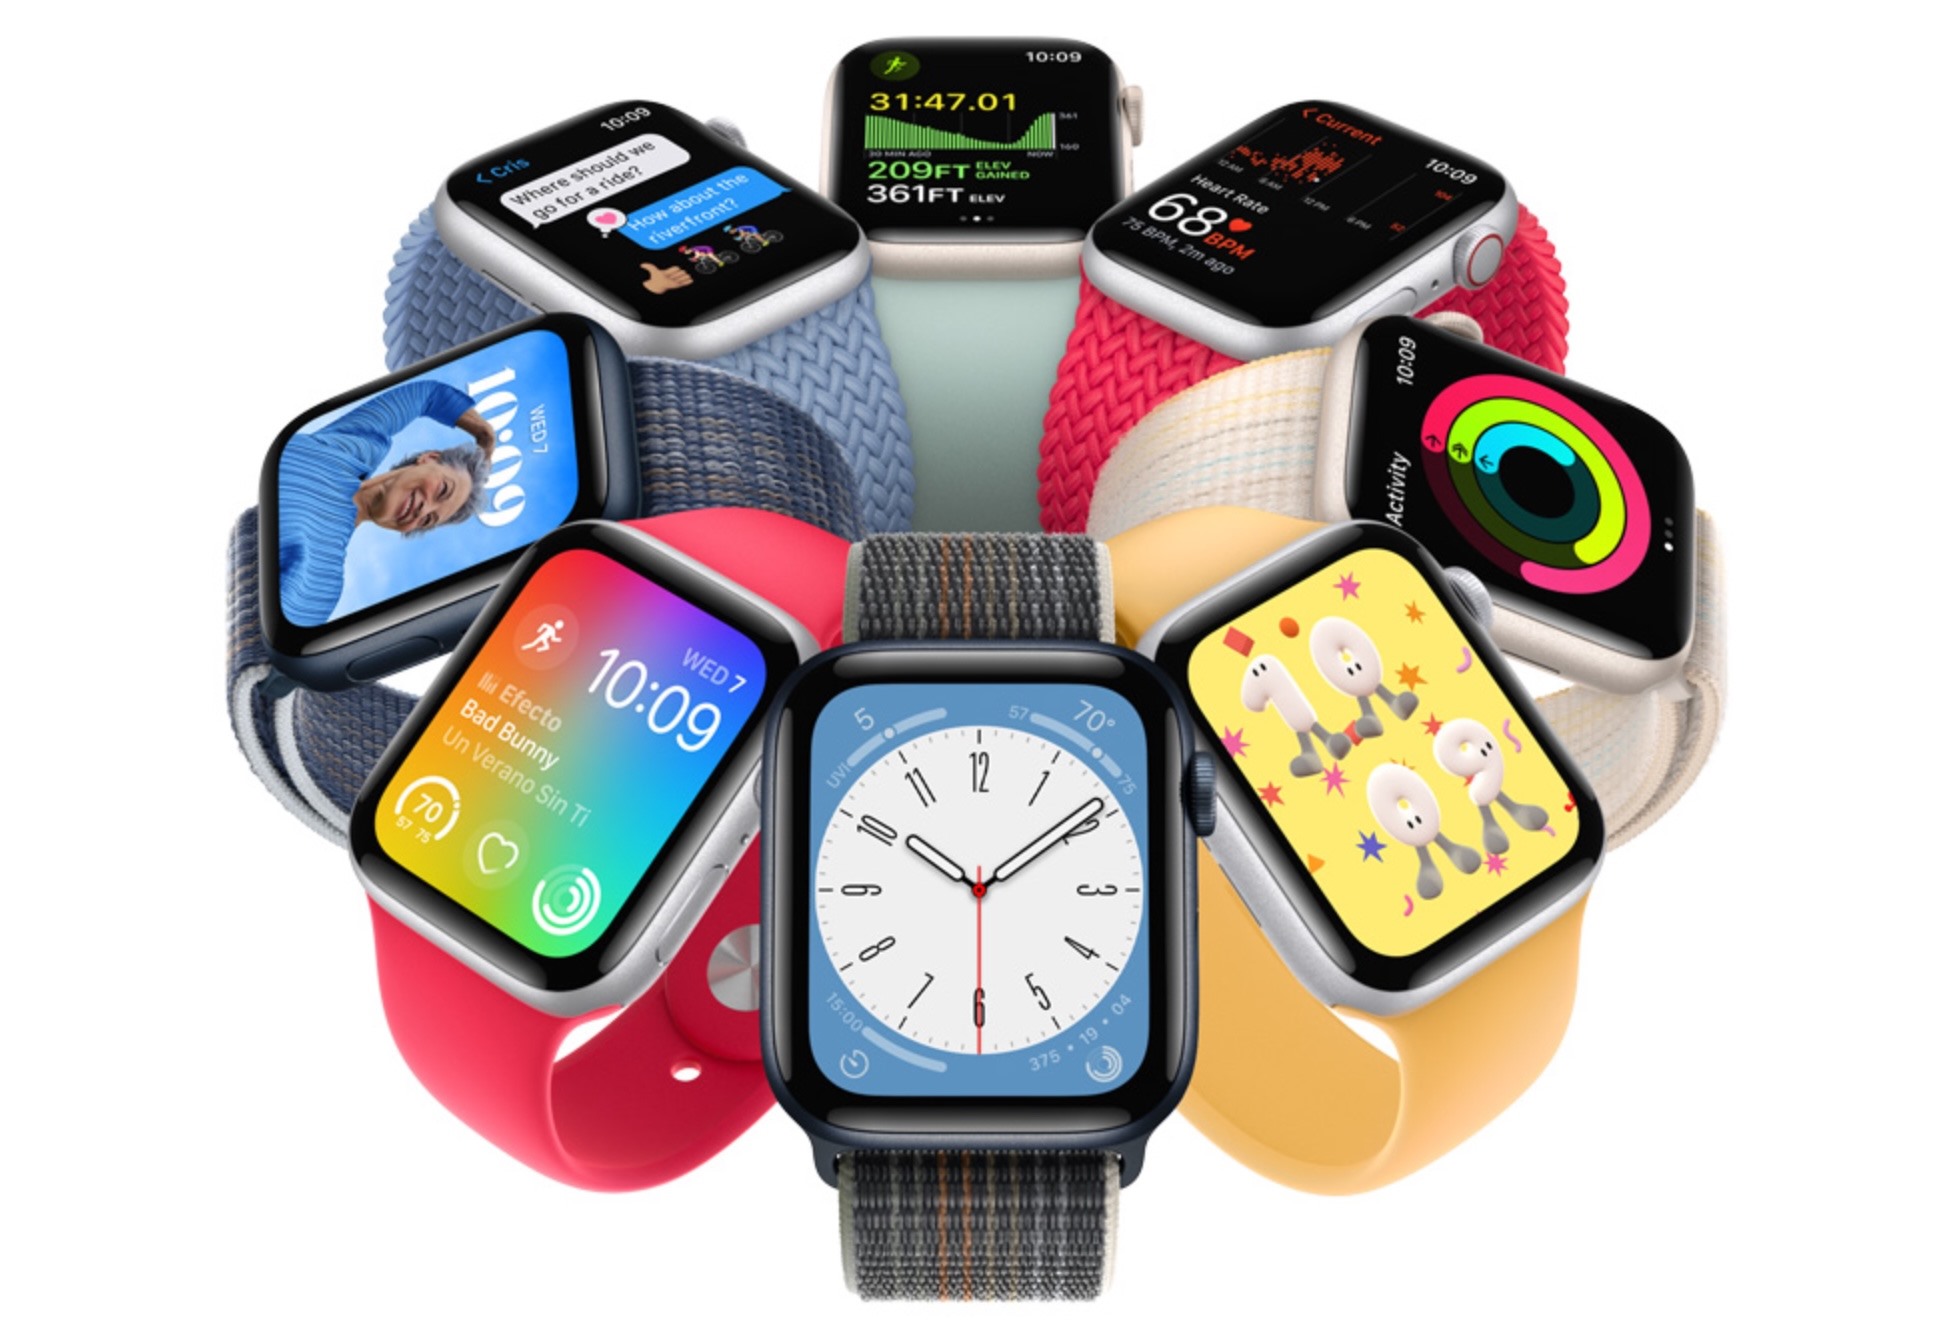 Apple Watch chiếm vị trí thứ hai, sau iPhone. ảnh: Apple